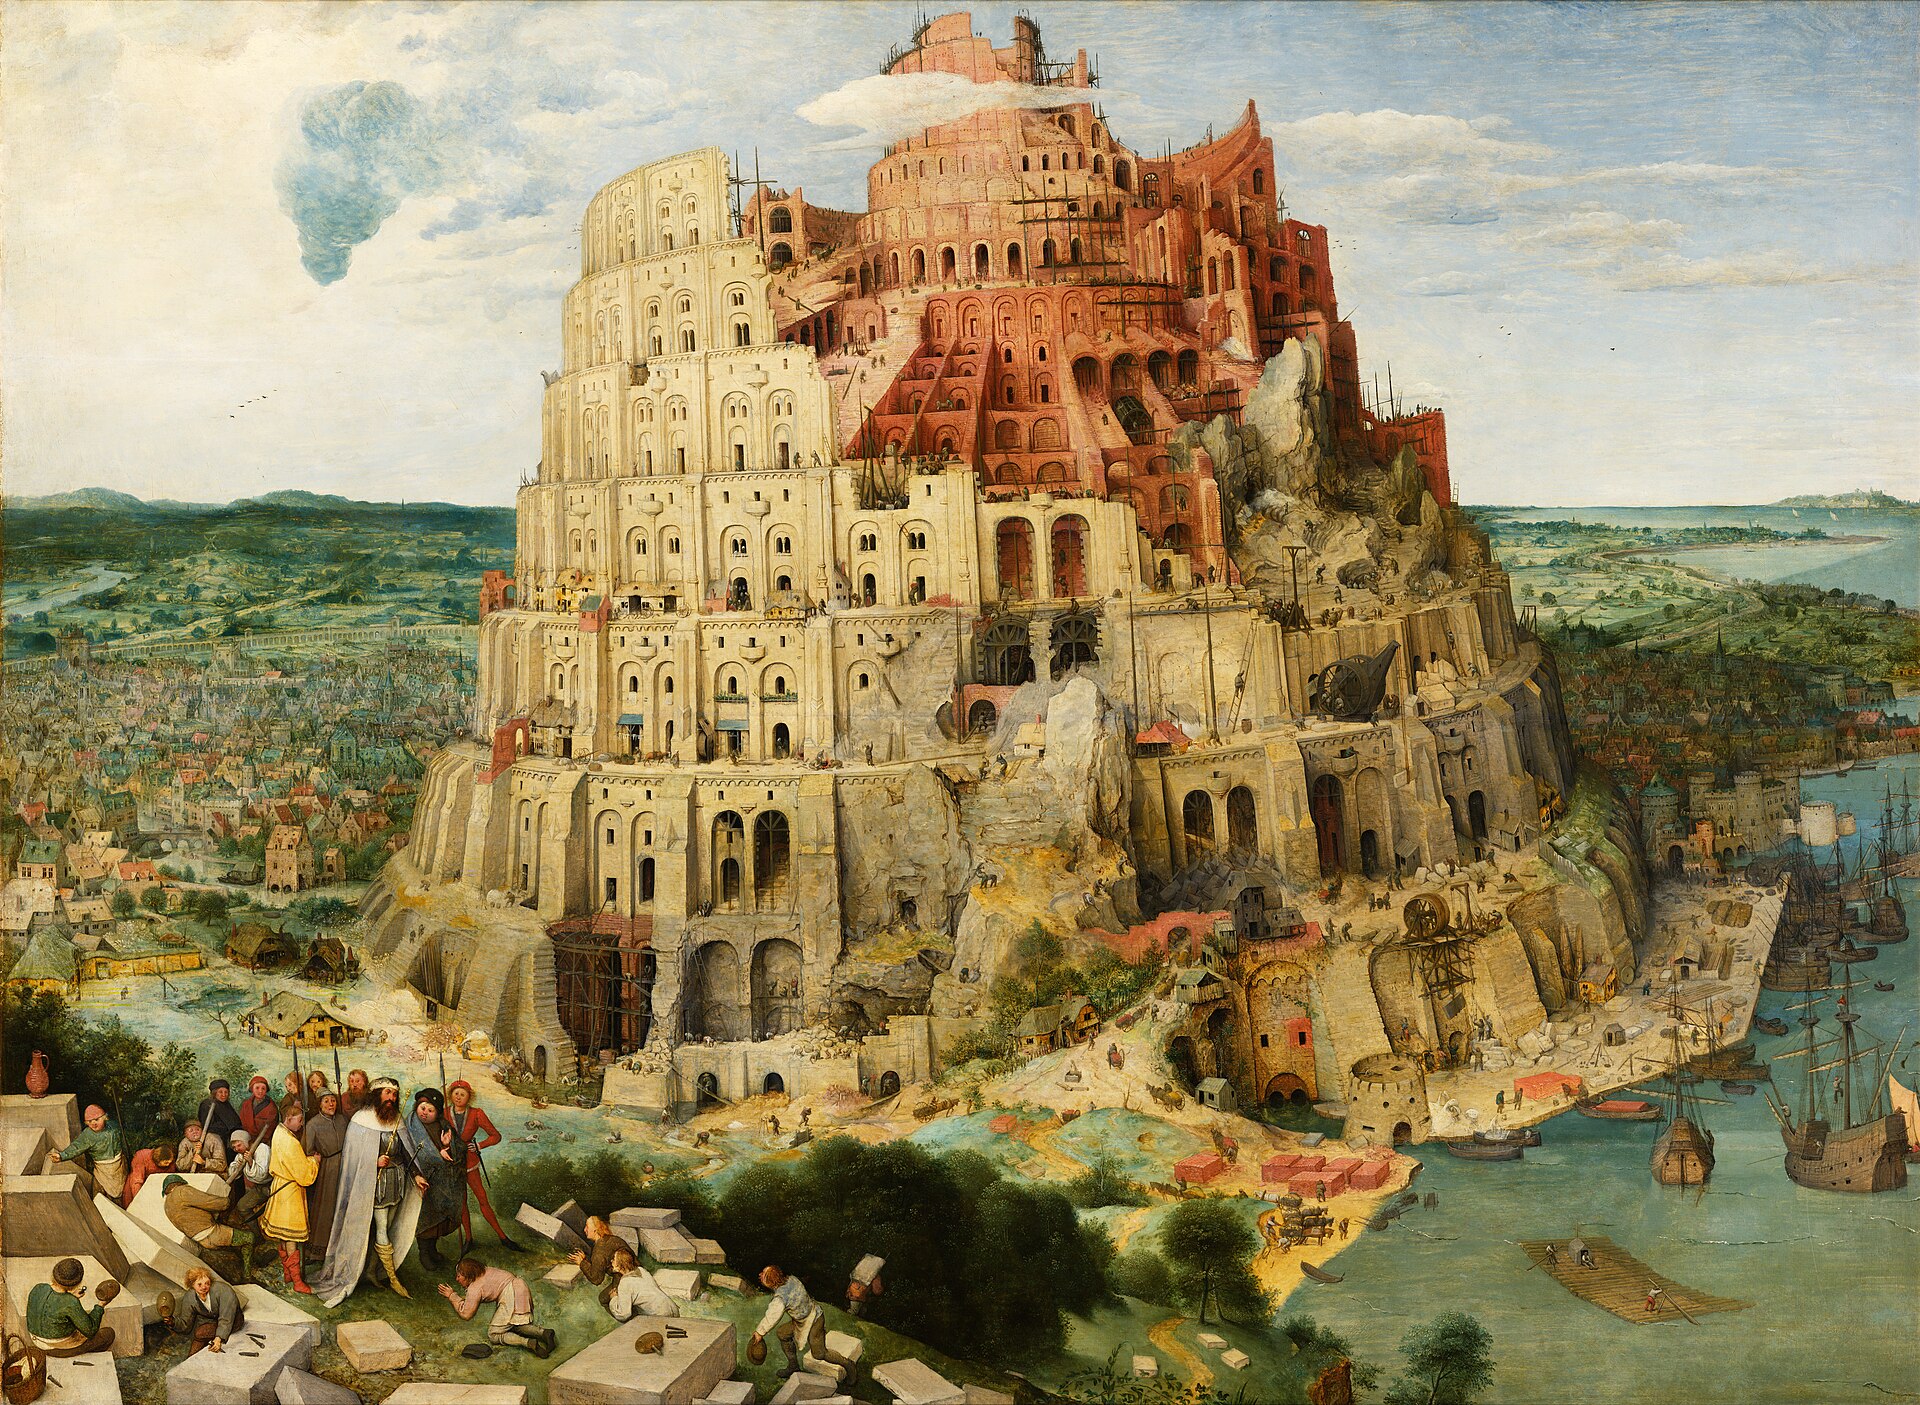 La Torre di Babele by Pieter Bruegel il Vecchio - 1563 circa - 114 × 155 cm Kunsthistorisches Museum